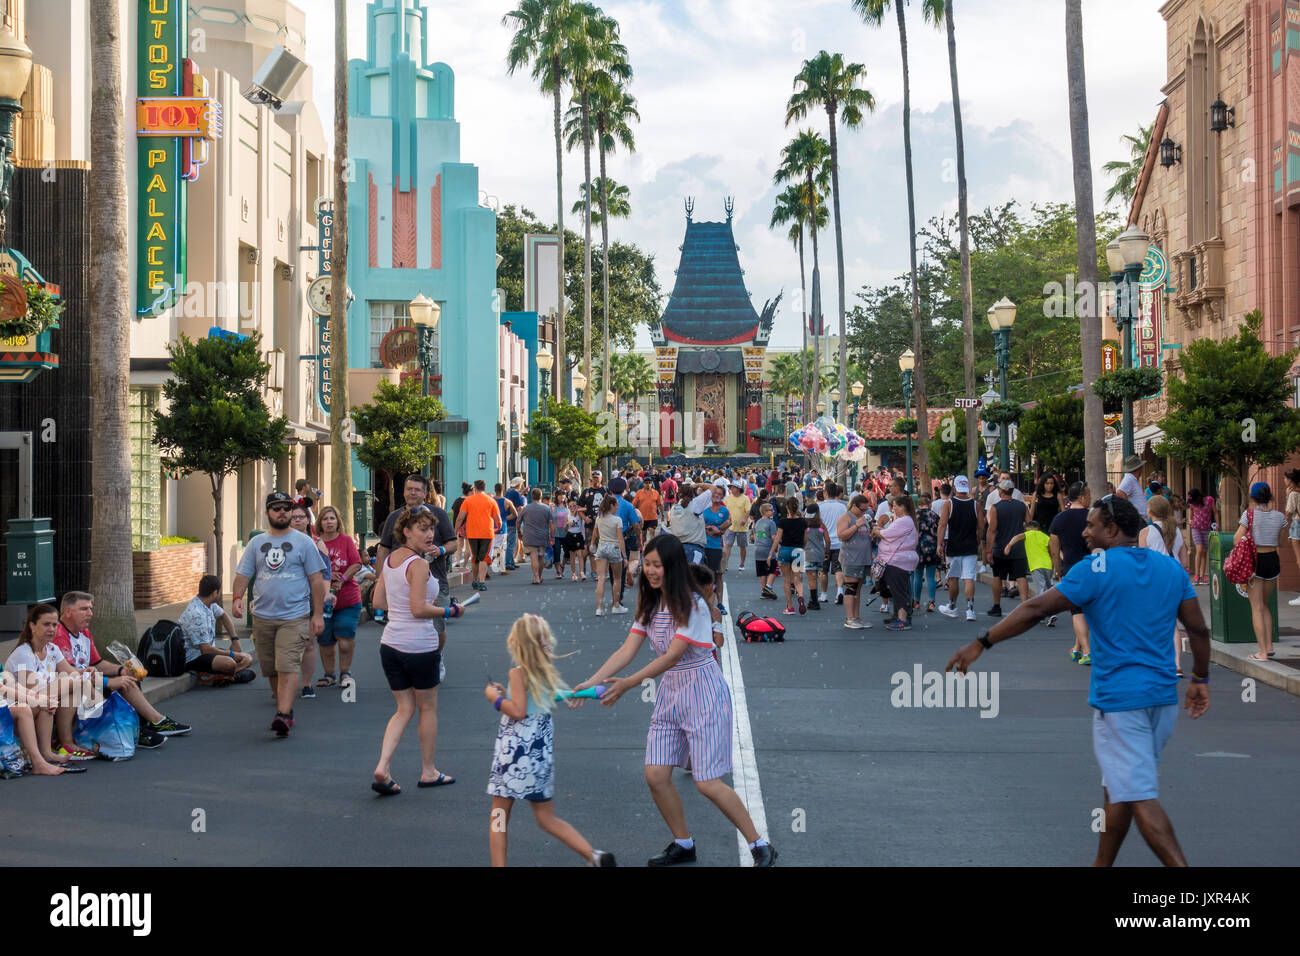 Sunset Boulevard in Hollywood Studios theme park, Walt Disney World, Orlando, Florida. Stock Photo